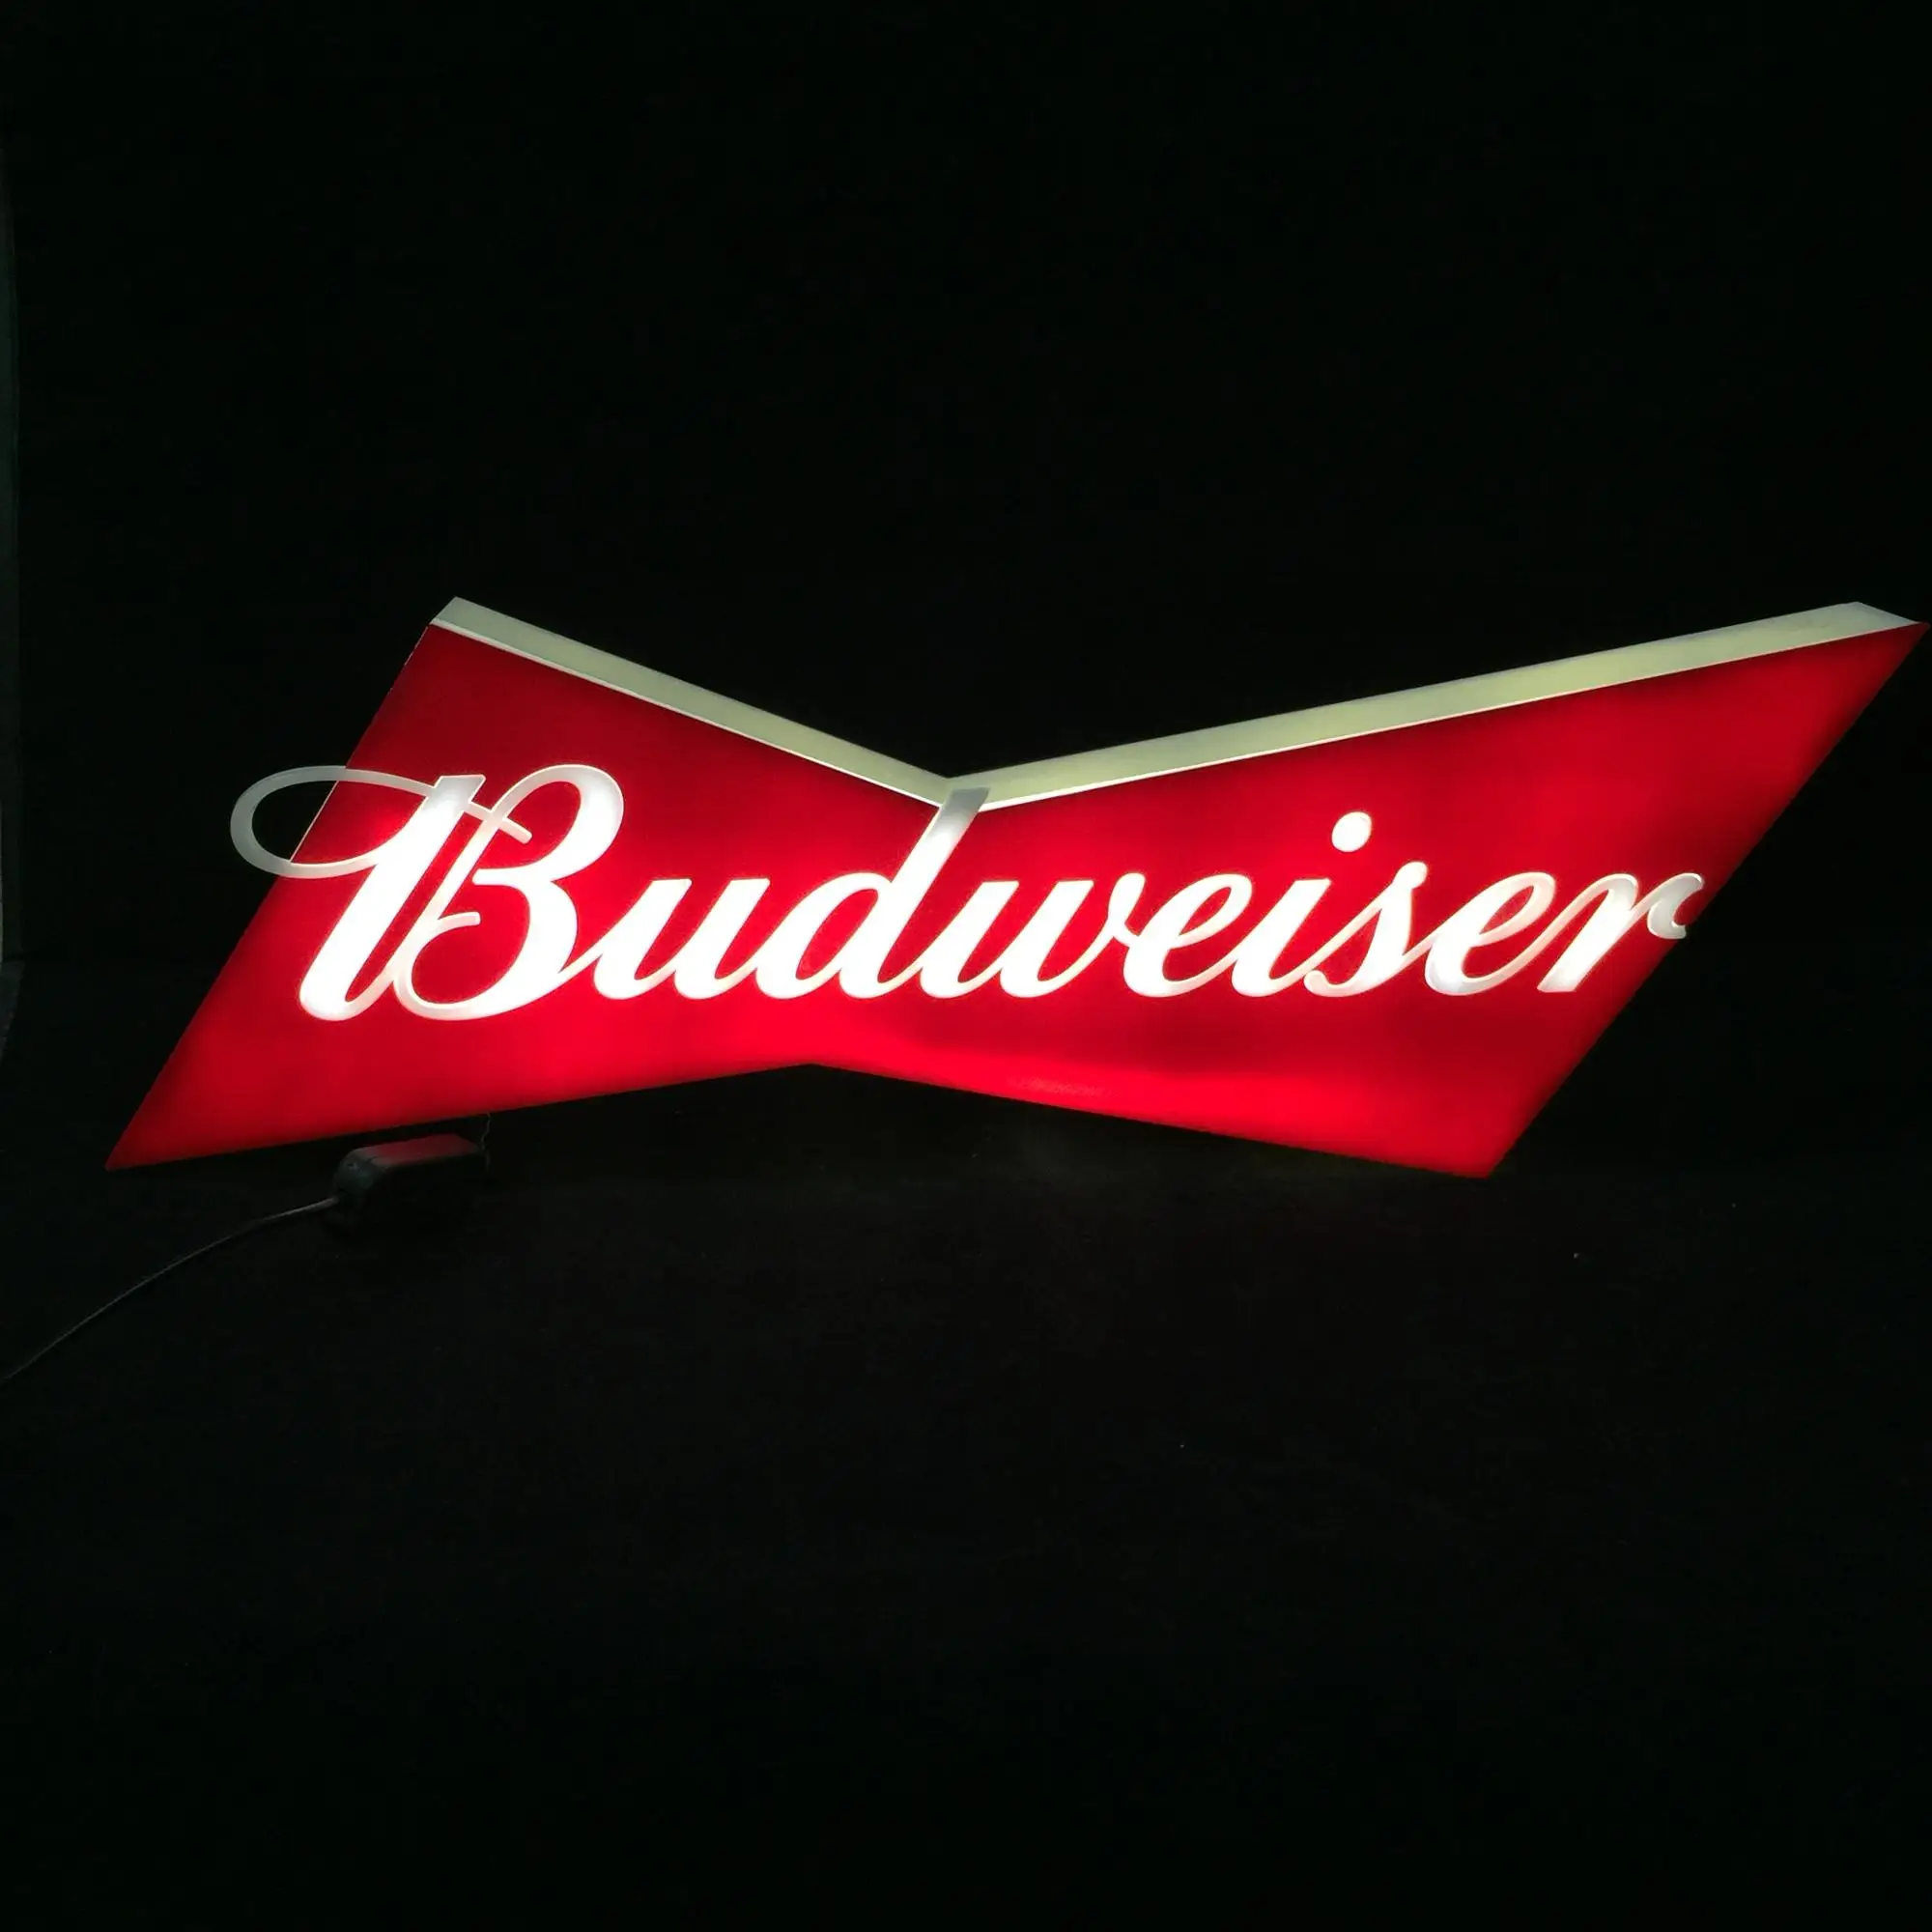 Budweiser Led Bar Wall Signs Buy Budweiser Neon Beer Sign,Illuminated